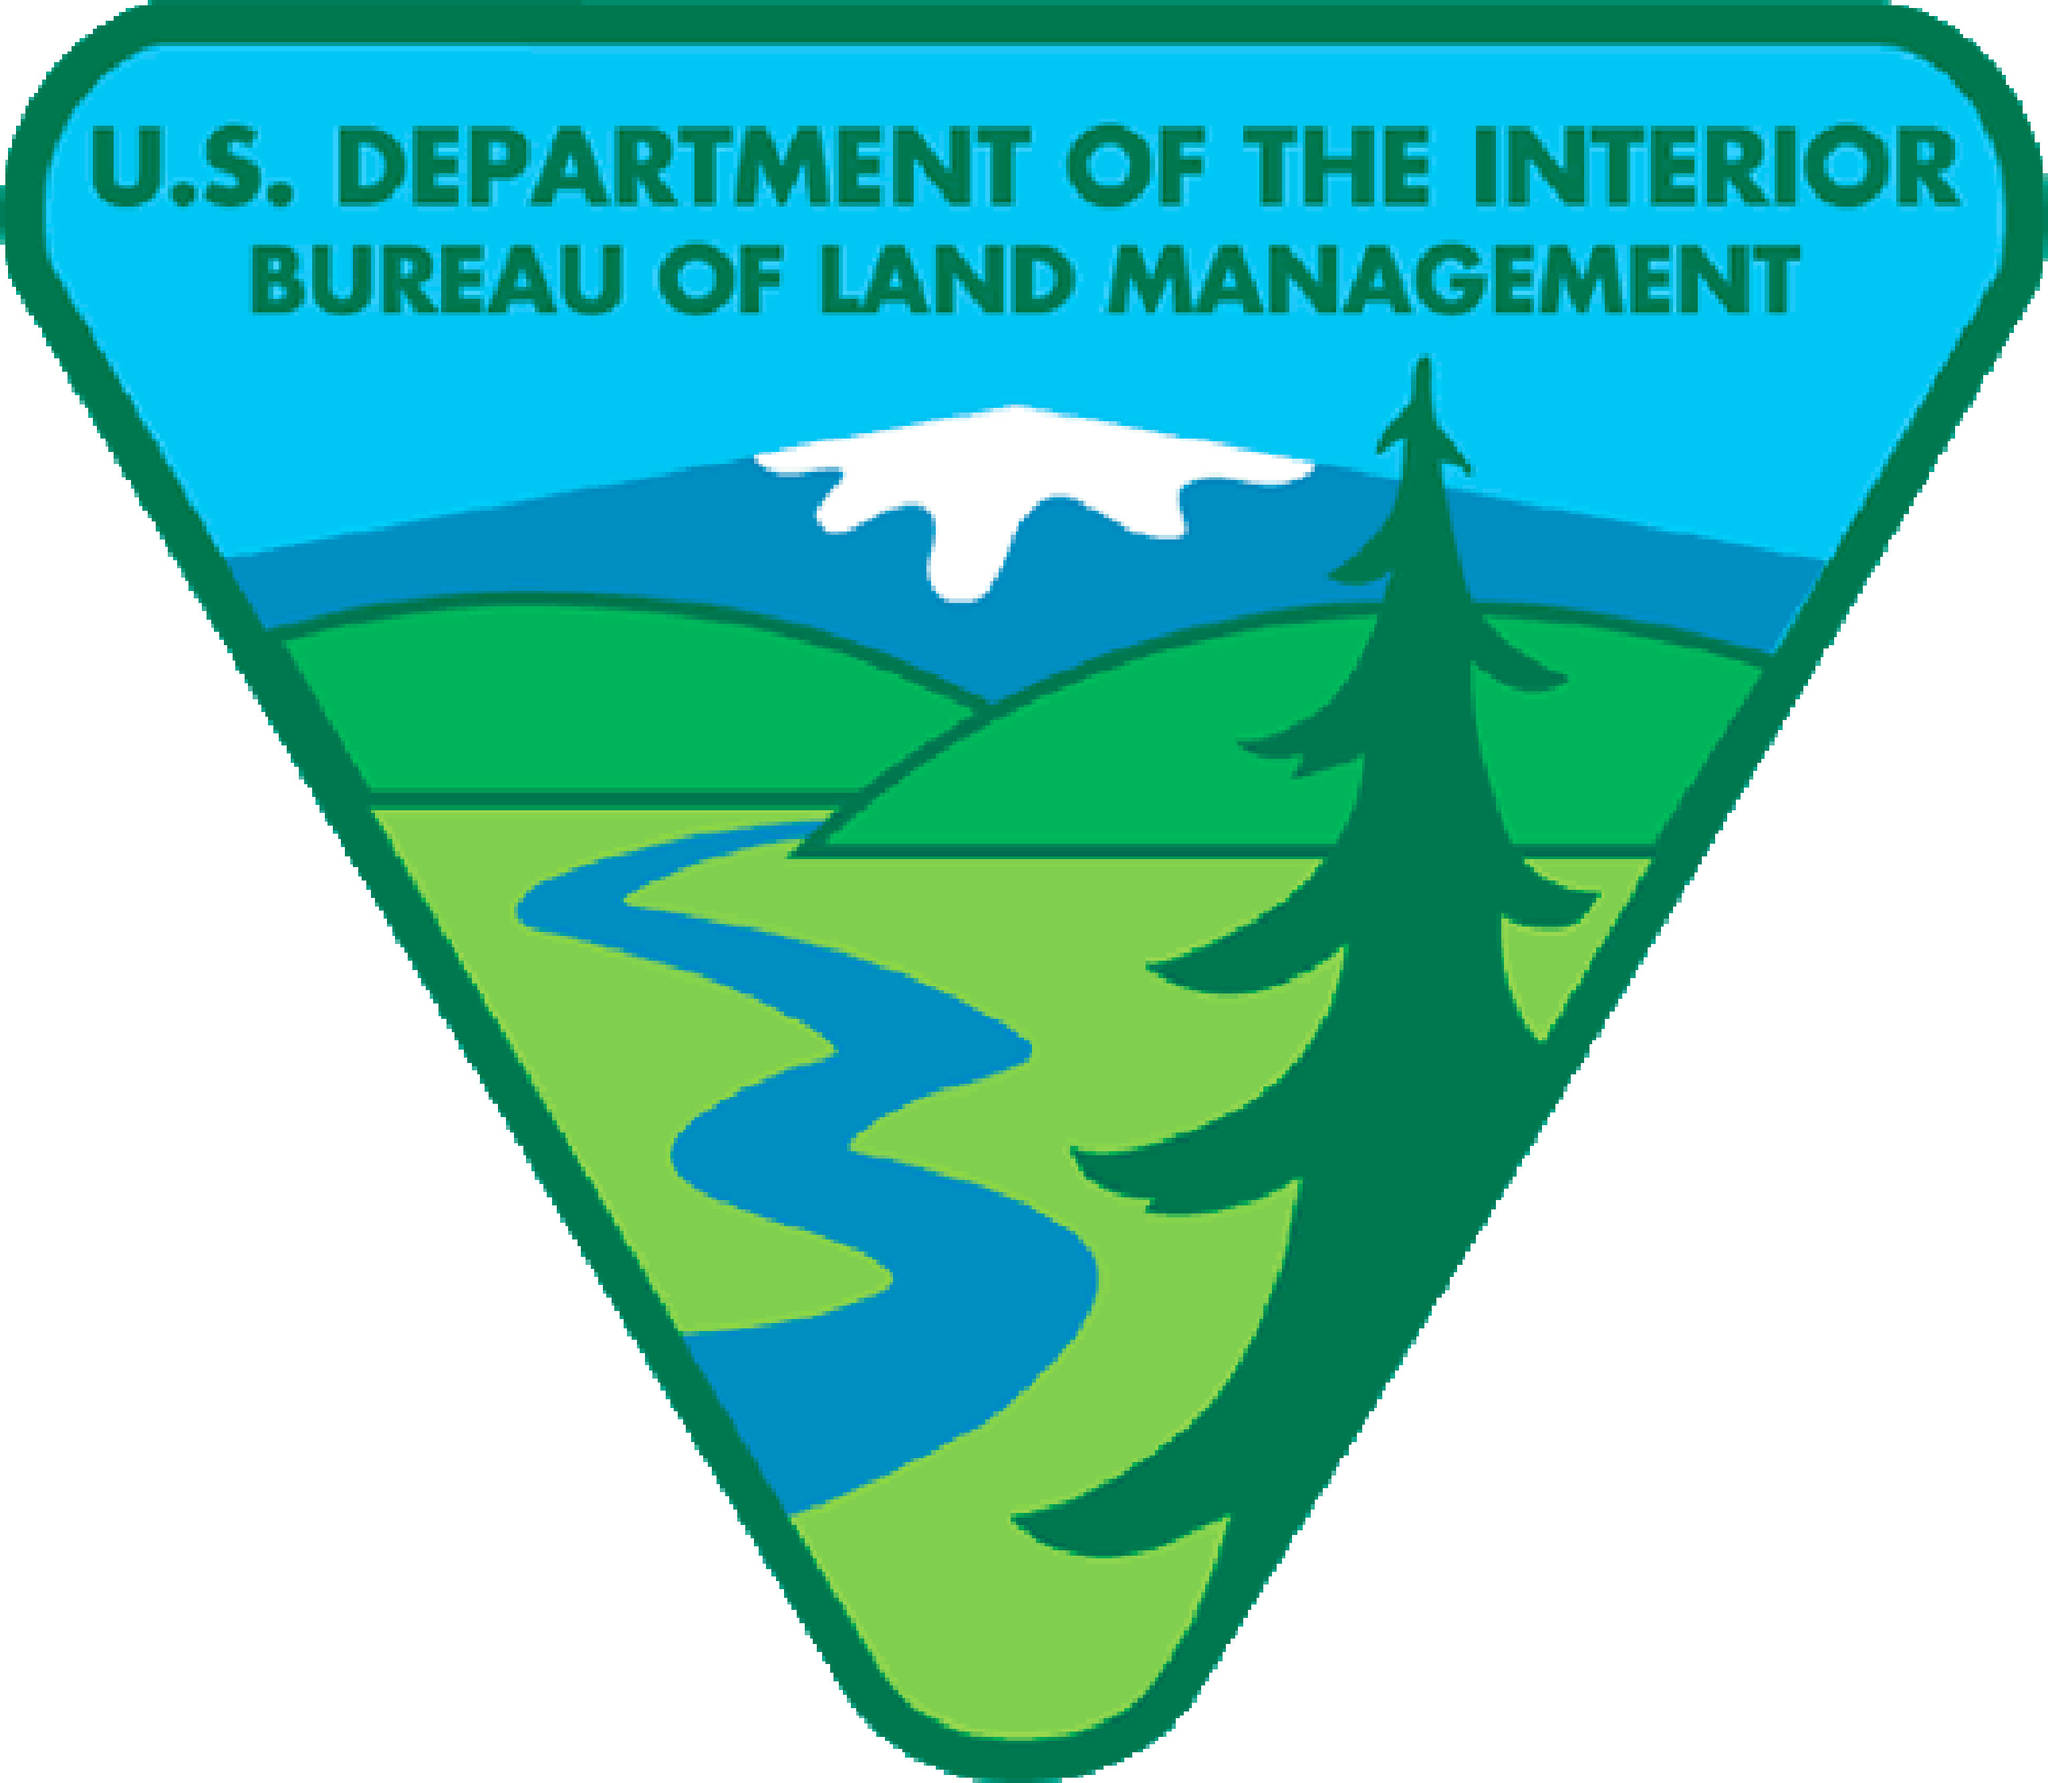 Help the Bureau of Land Management plan for the San Juan Islands National Monument